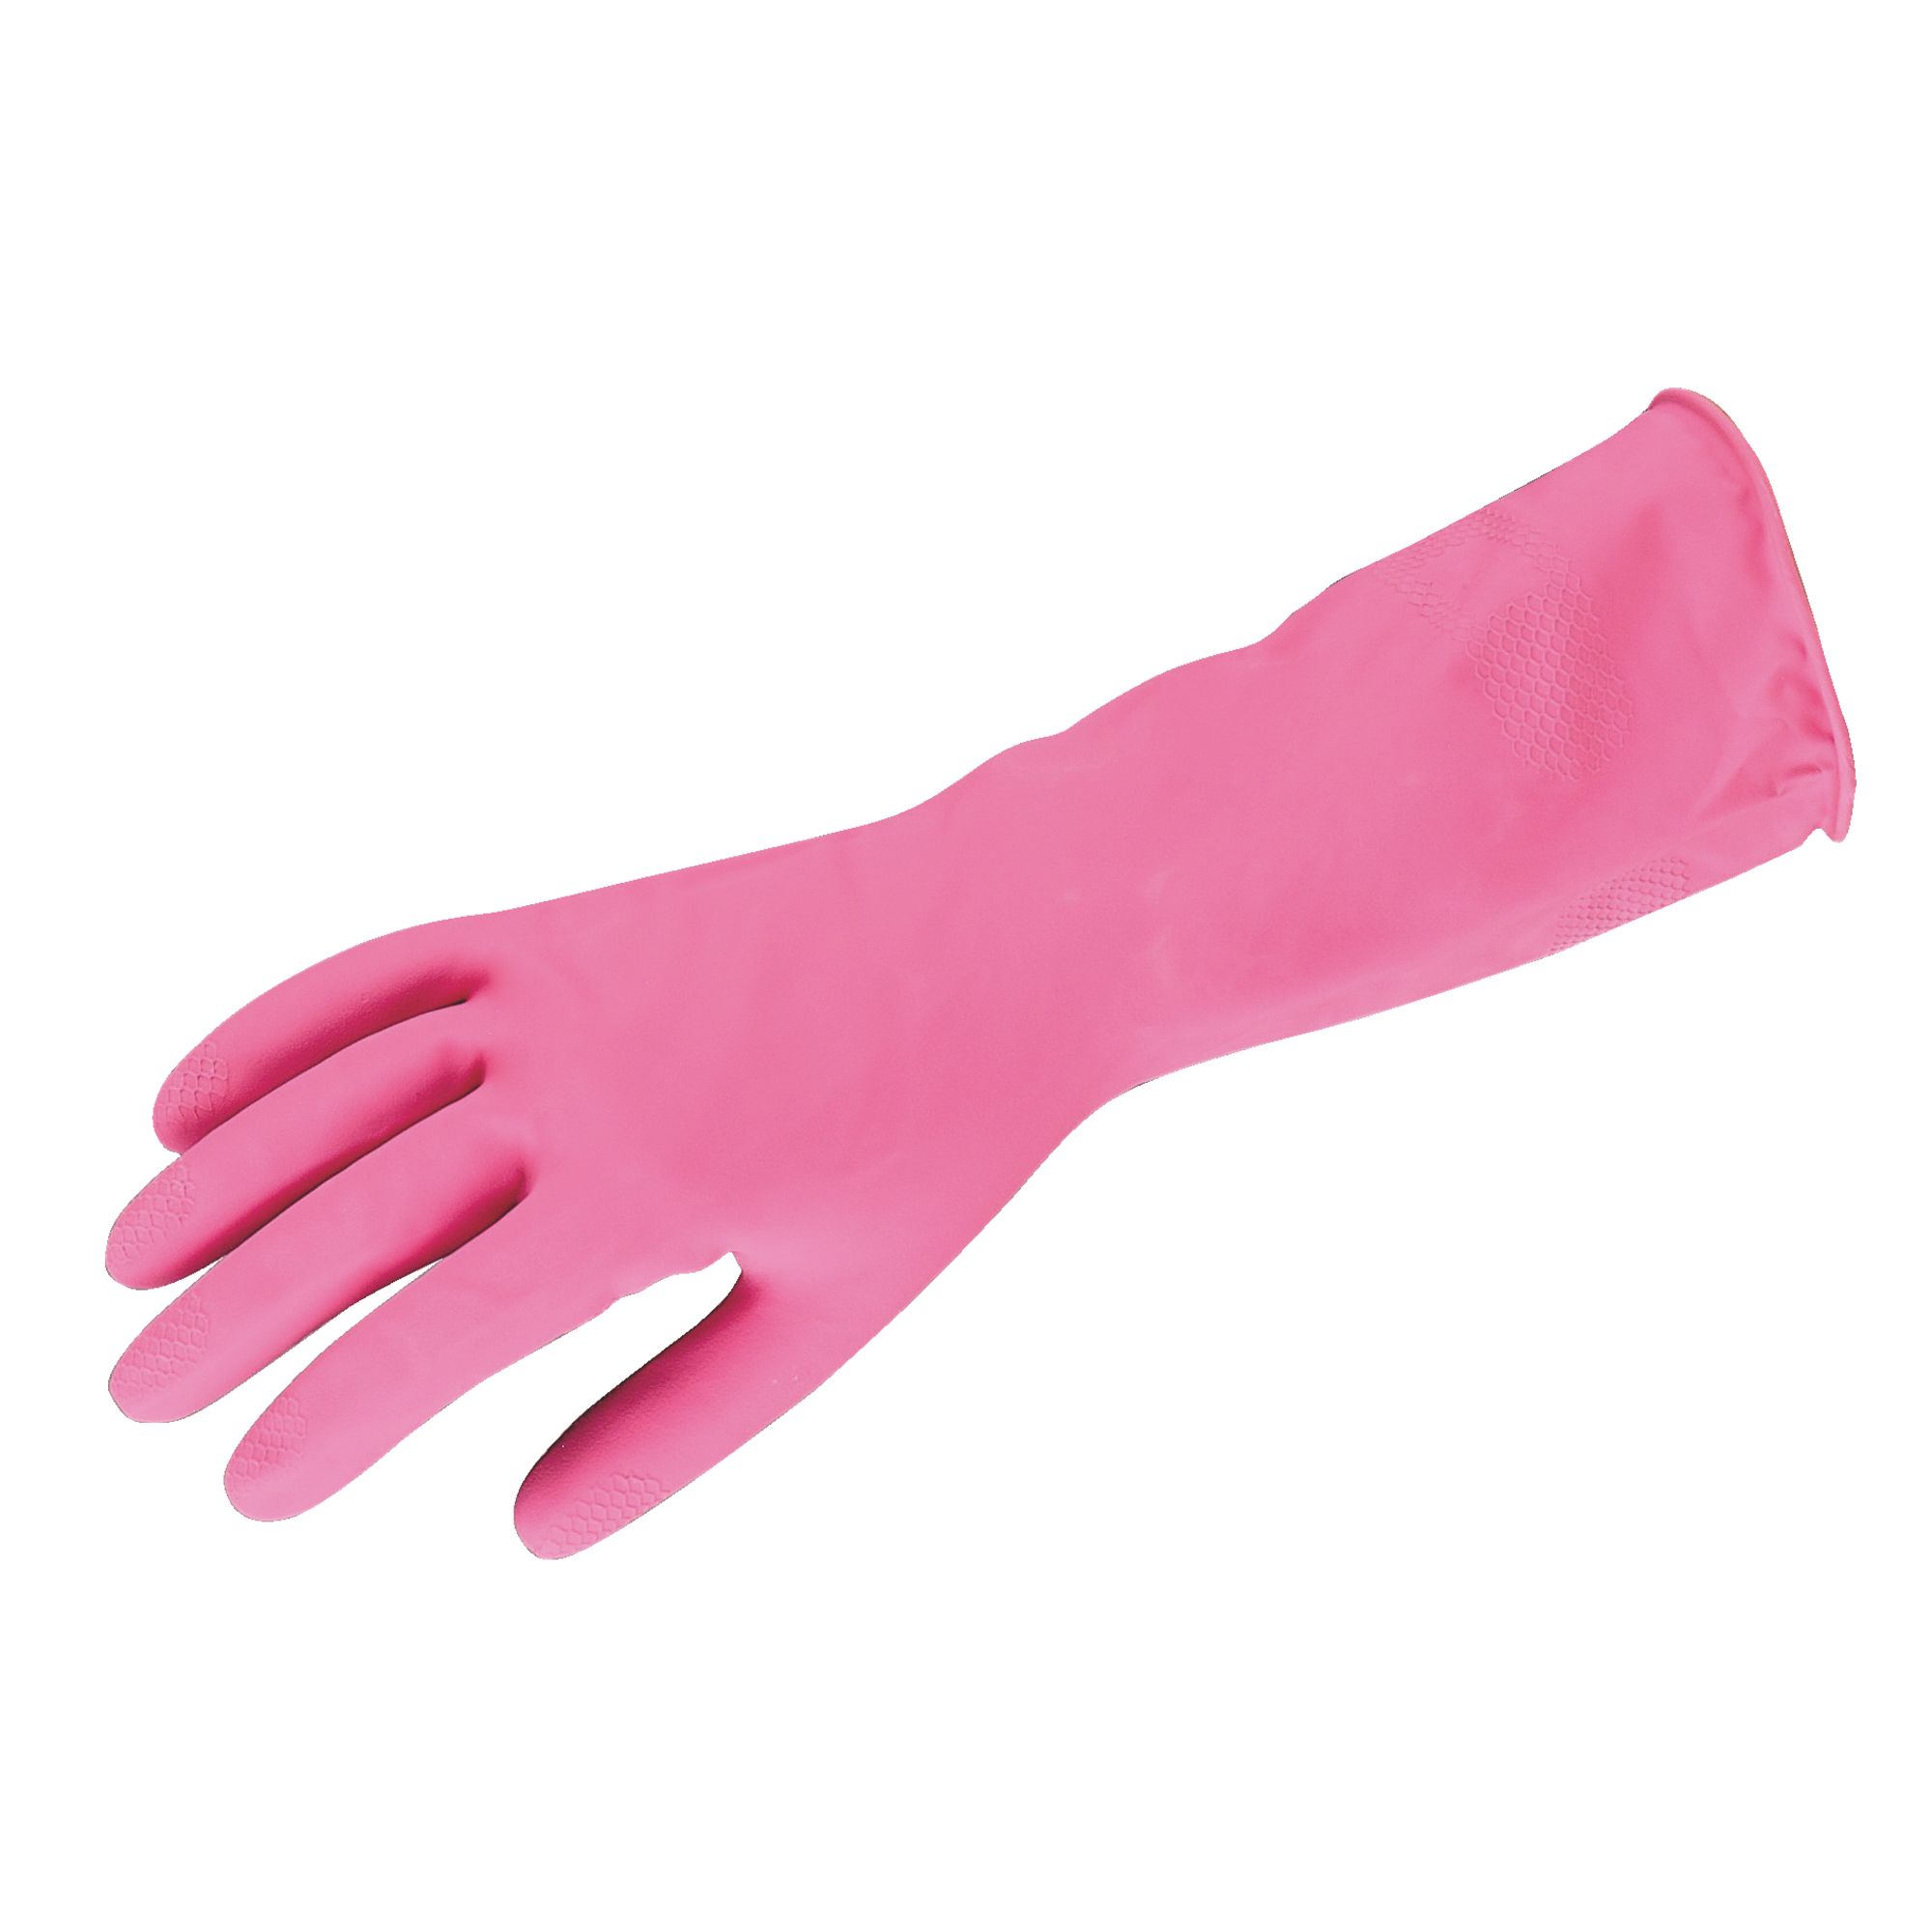 Gant de ménage rose avec fleur - moyen - gants de luxe en latex